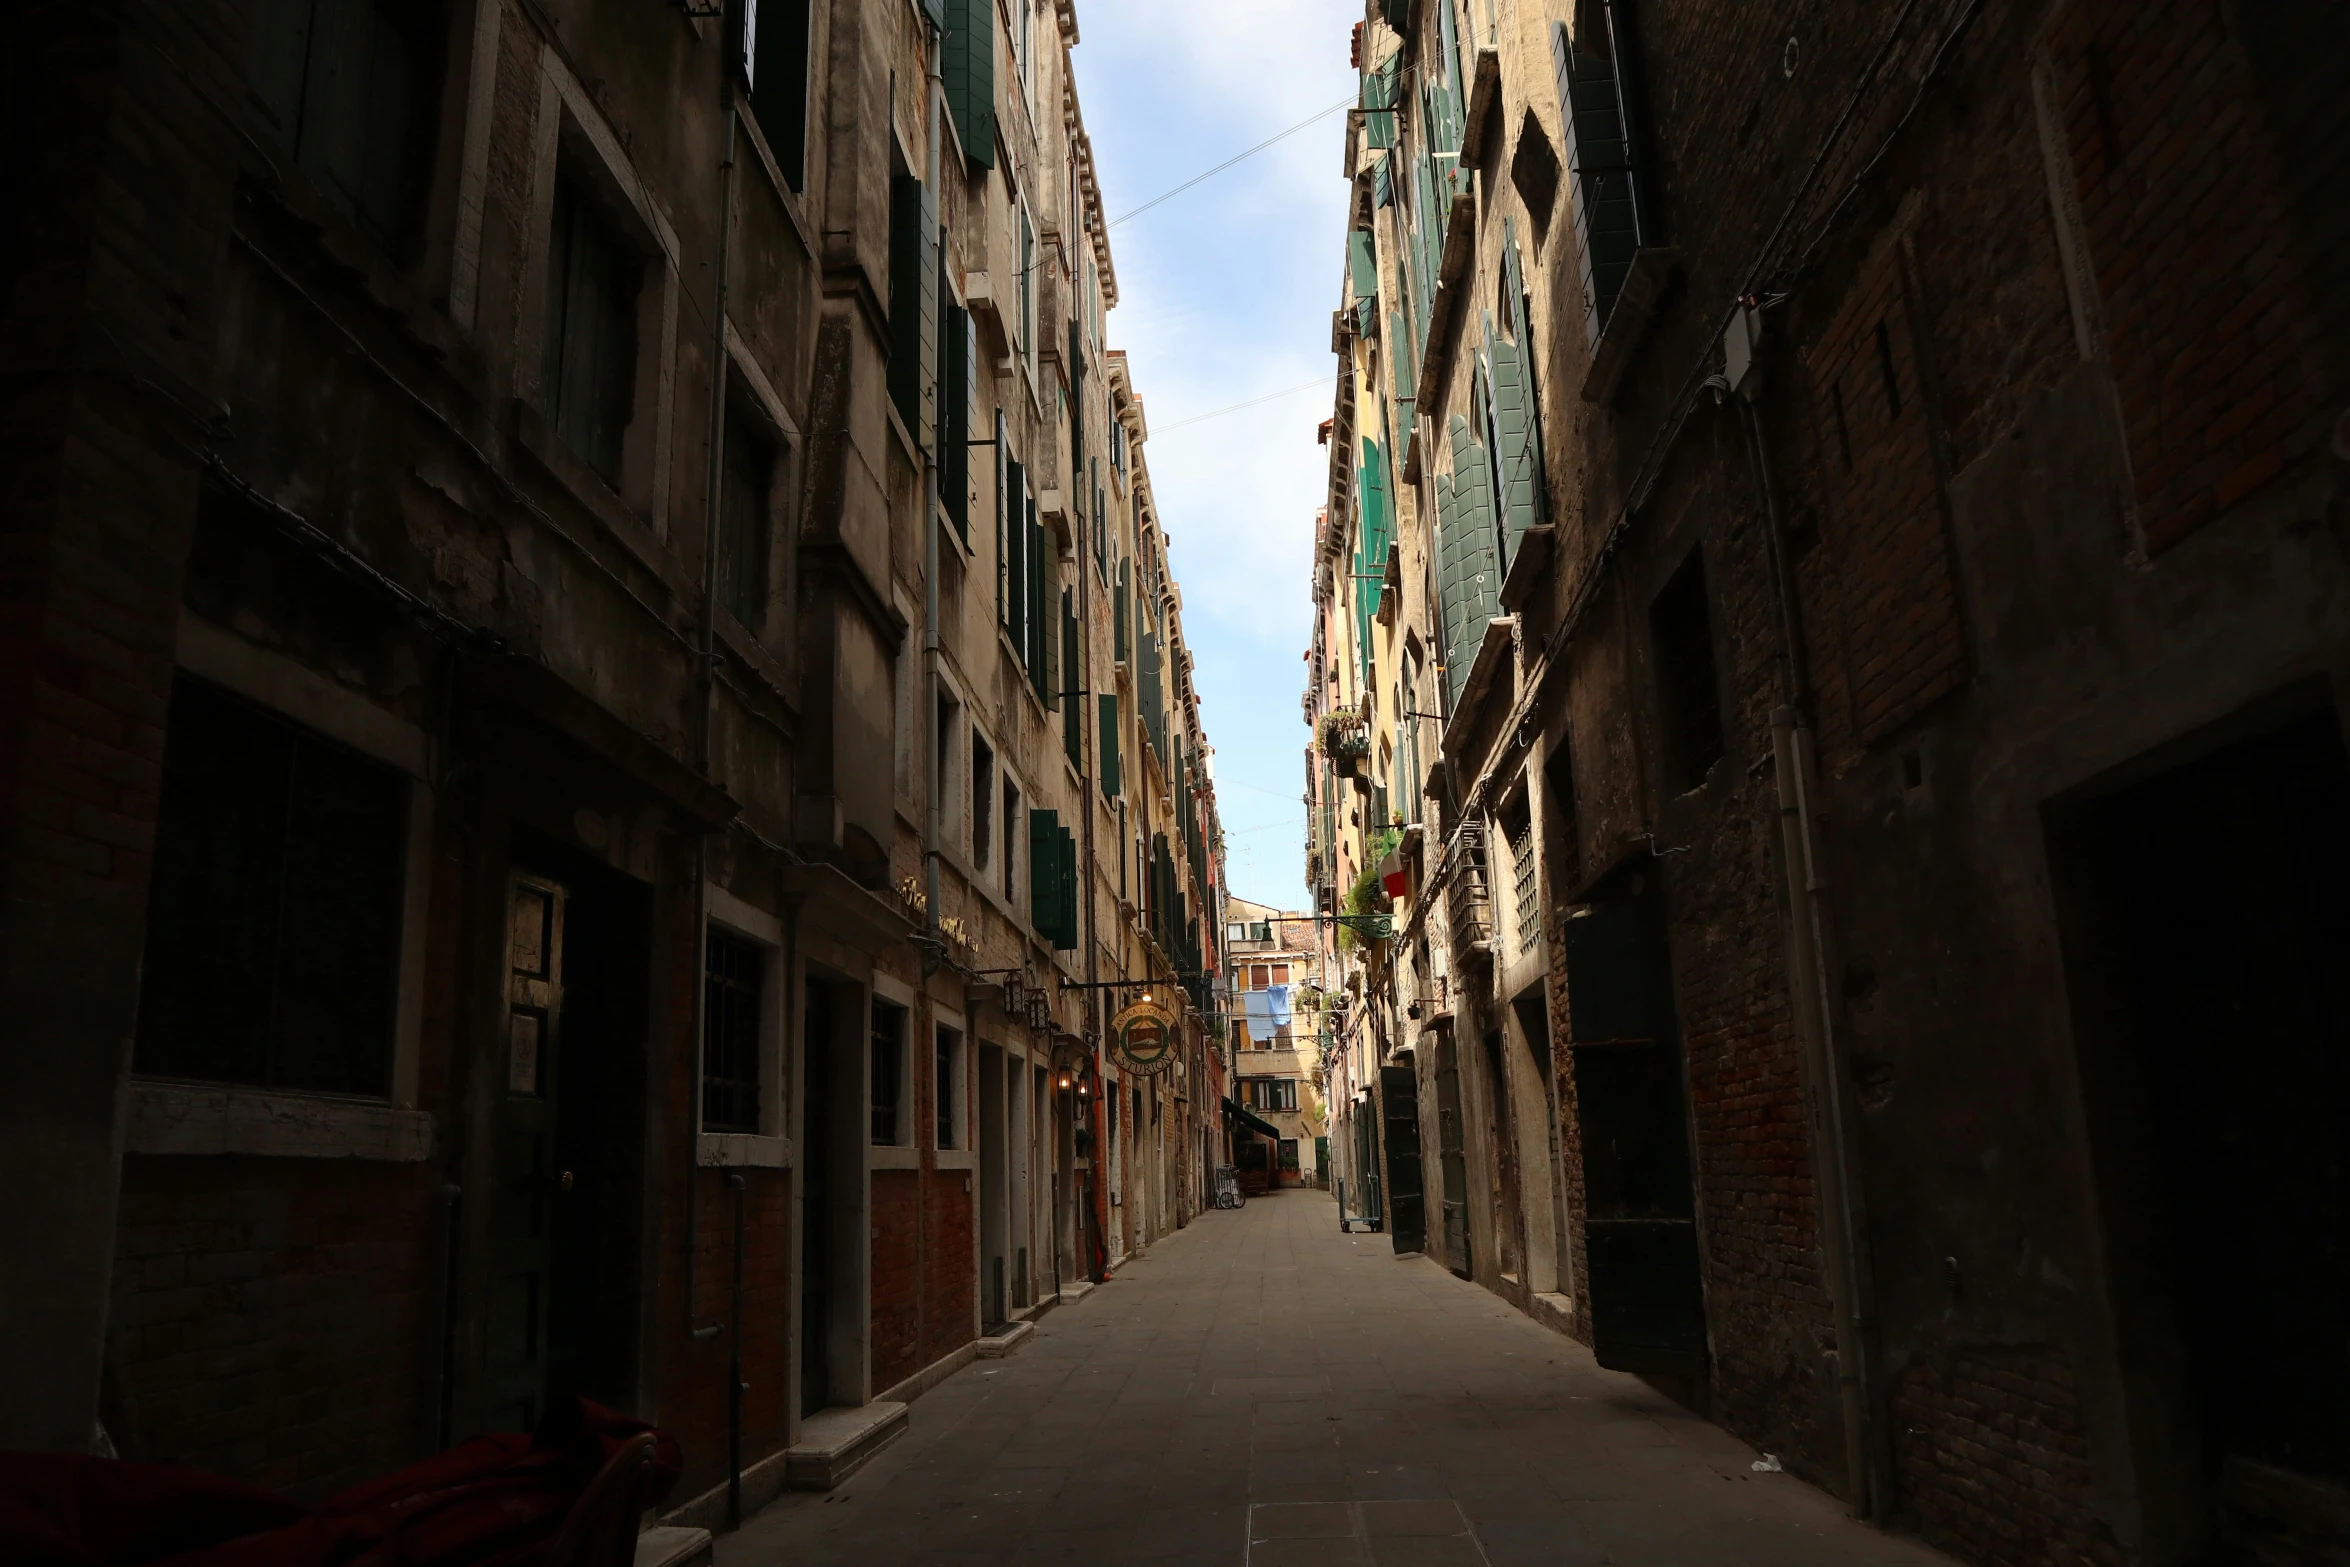 narrow street between buildings with doors on both sides